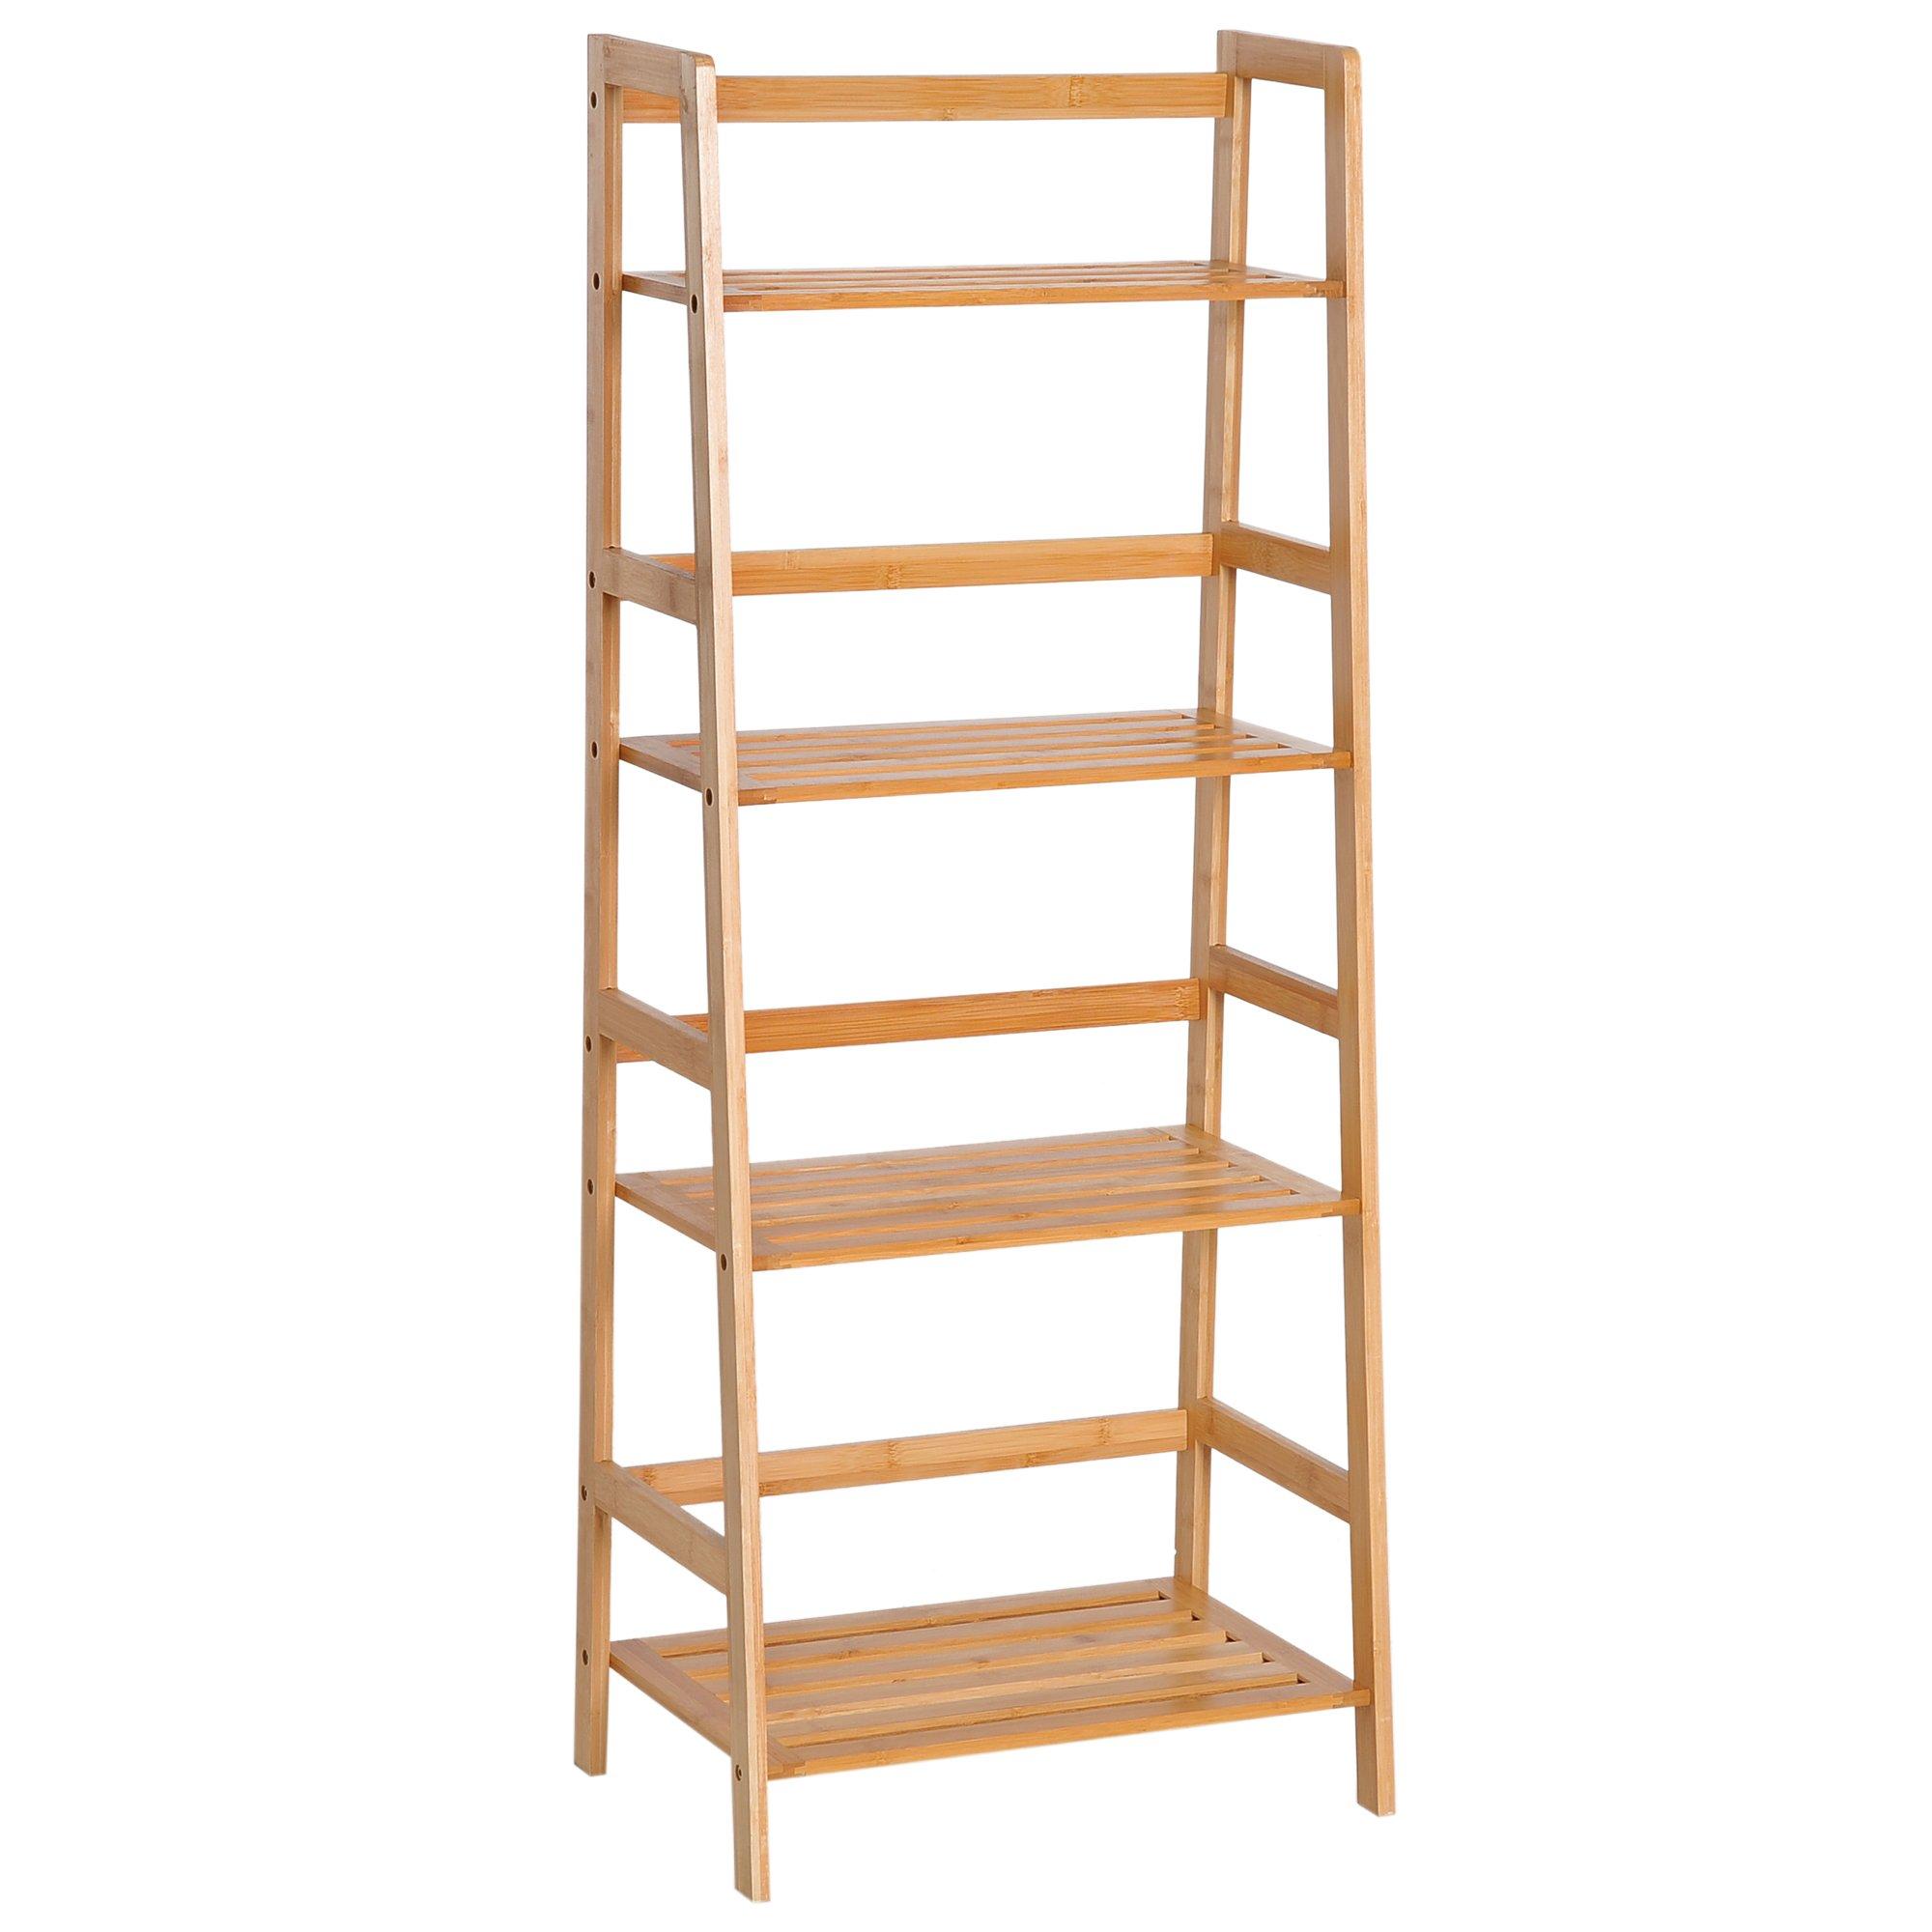 Bookshelf Unit Shelving 4 Tiers Ladder Shelf DIY Shelving Stand